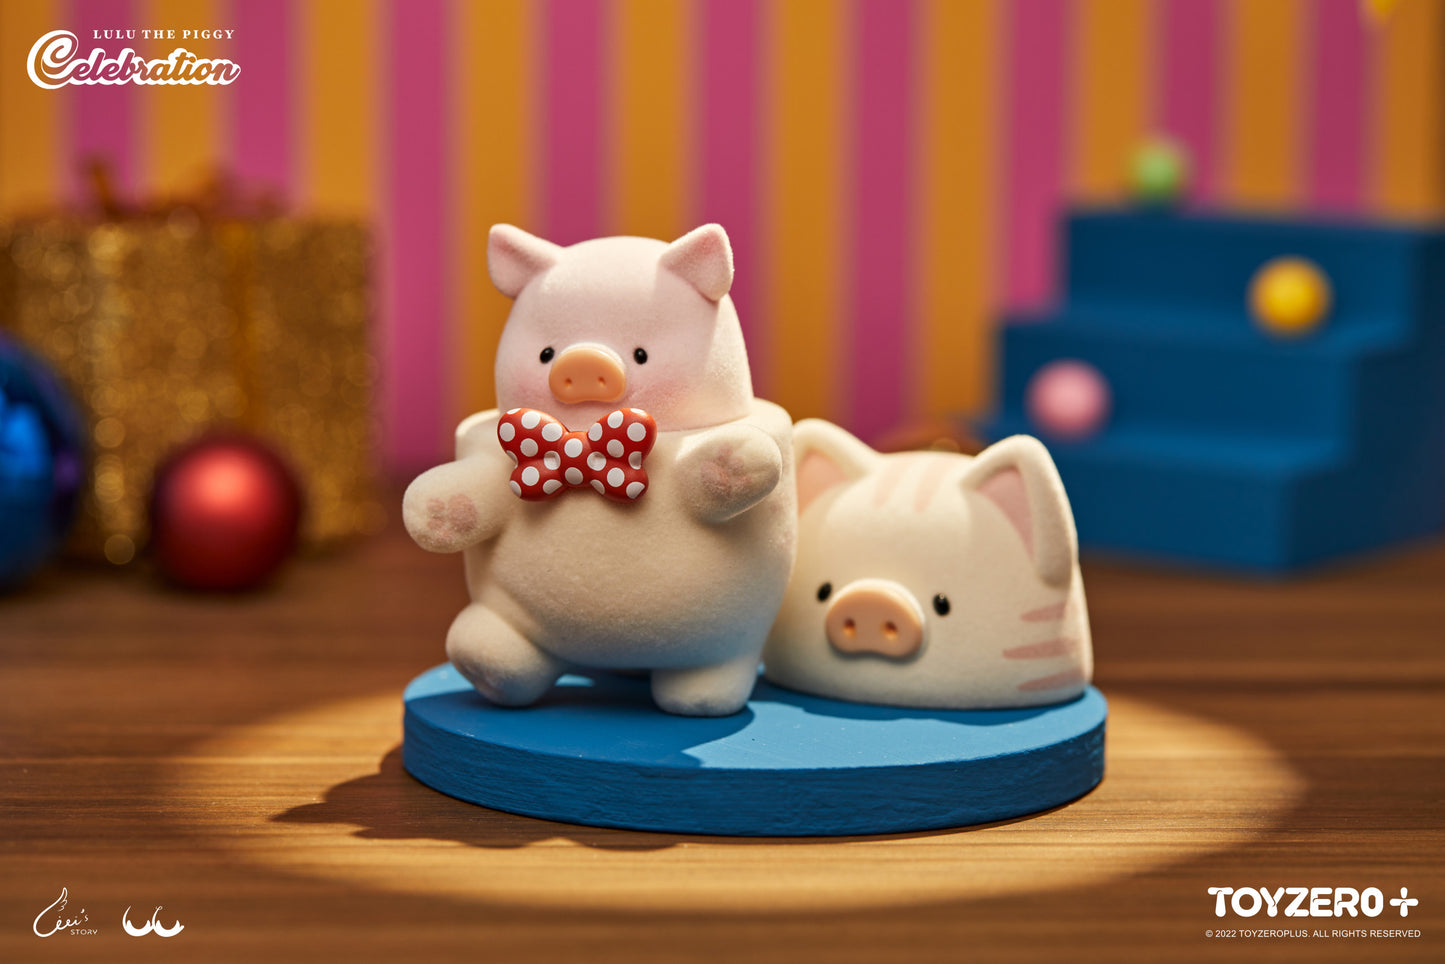 LuLu The Piggy - Celebration (Blind Box)